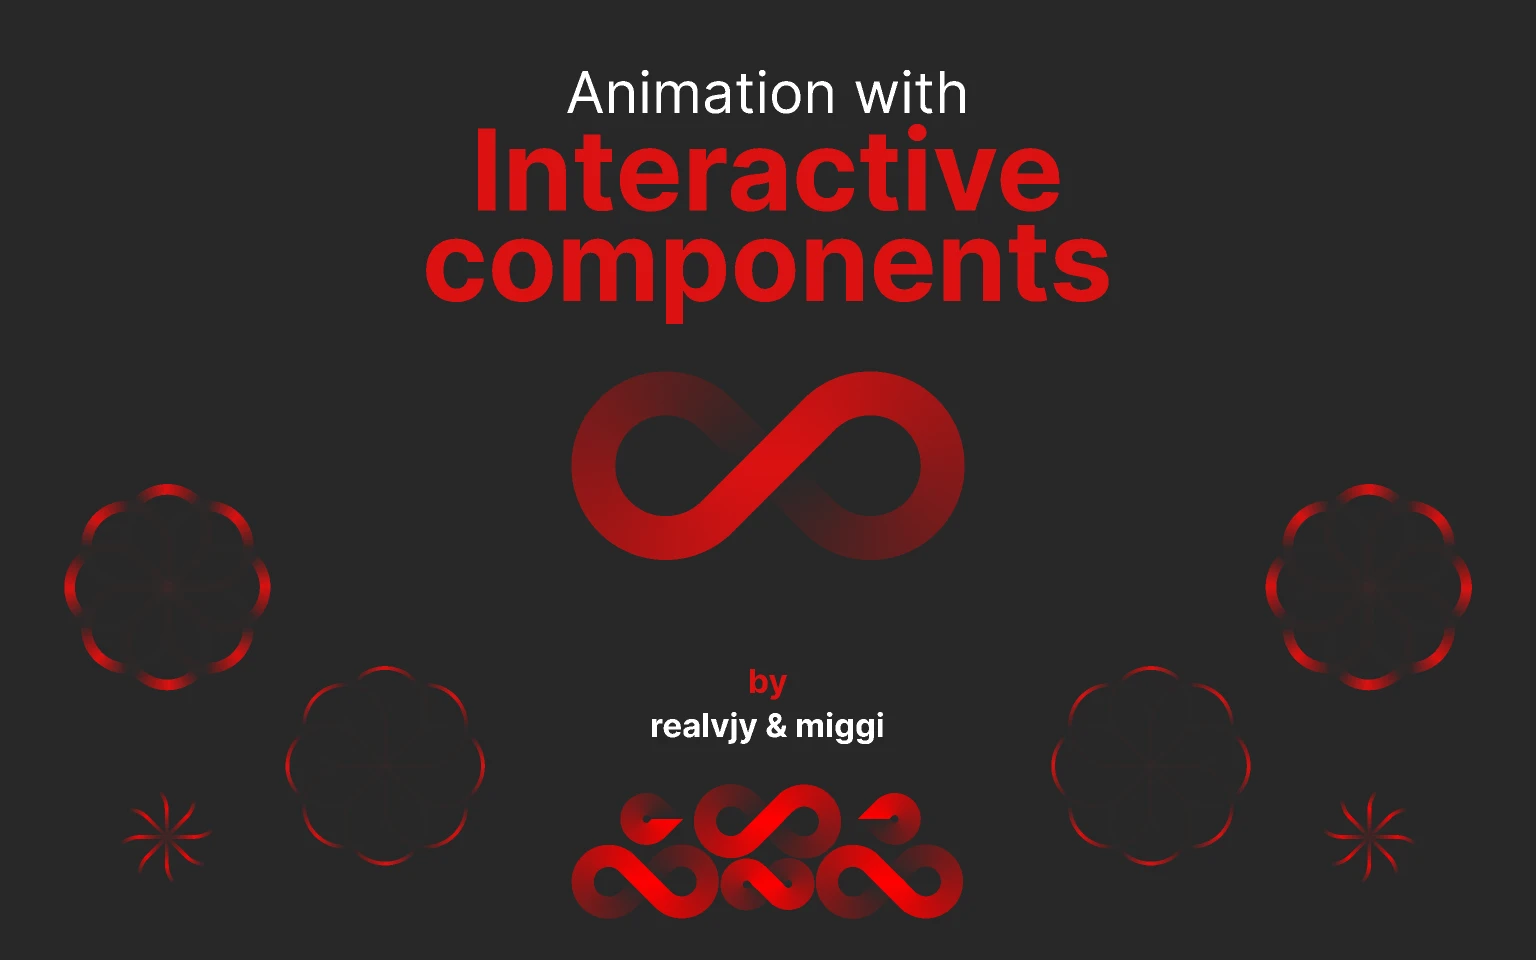 Fun with infinity symbol - miggi & realvjy for Figma and Adobe XD